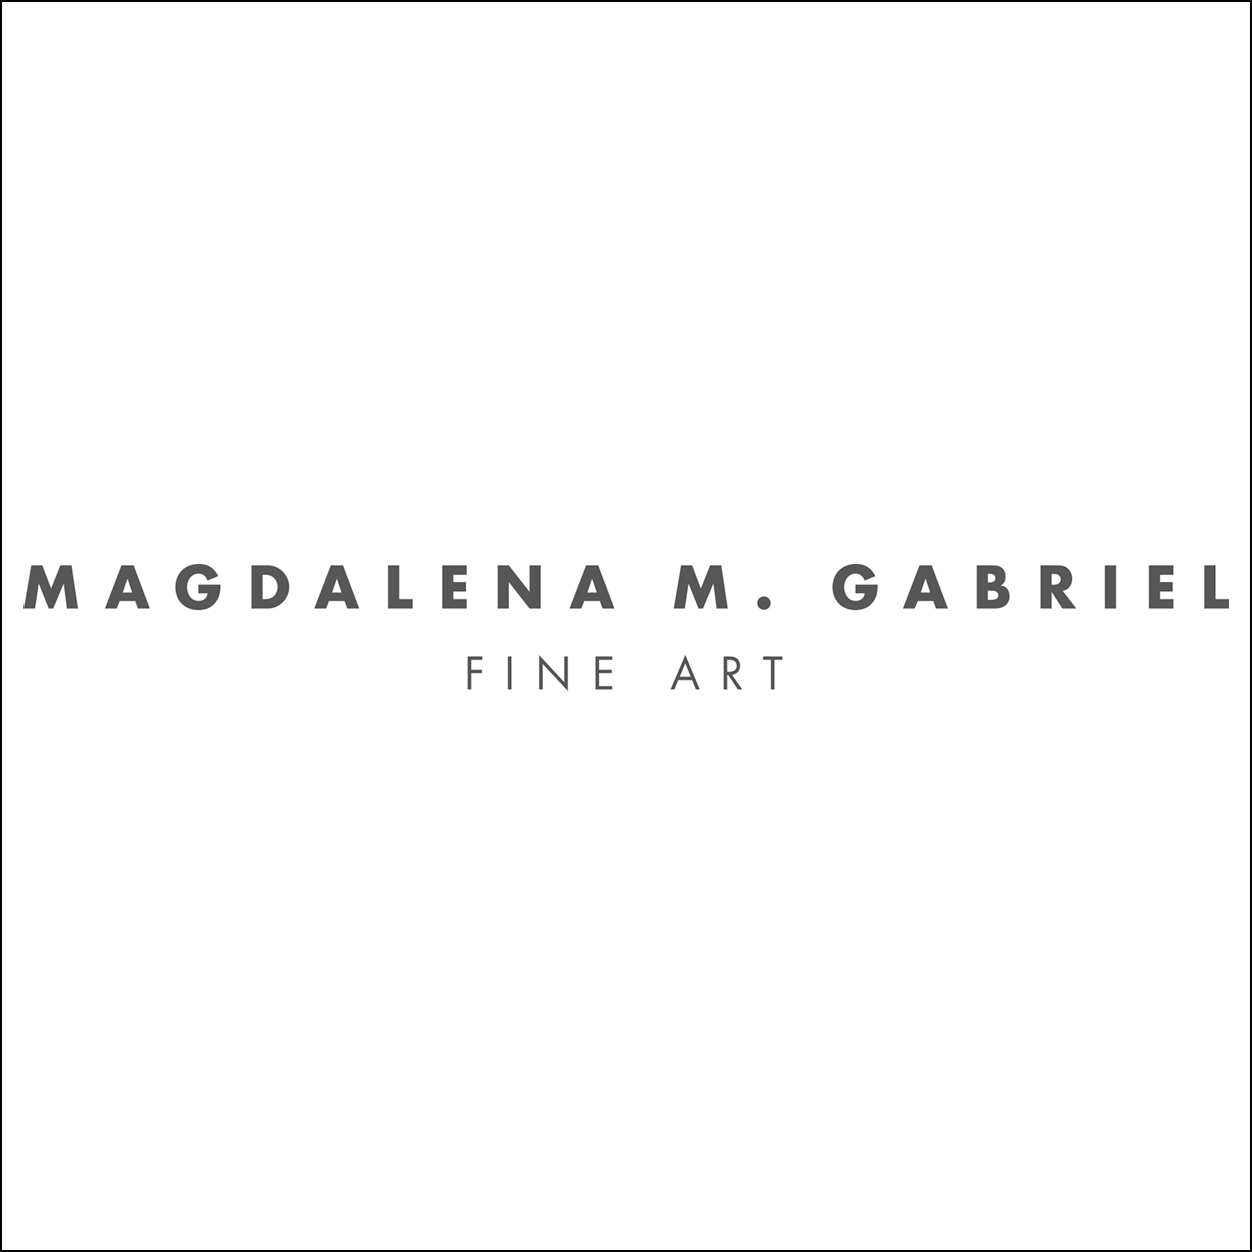 Magdalena M. Gabriel